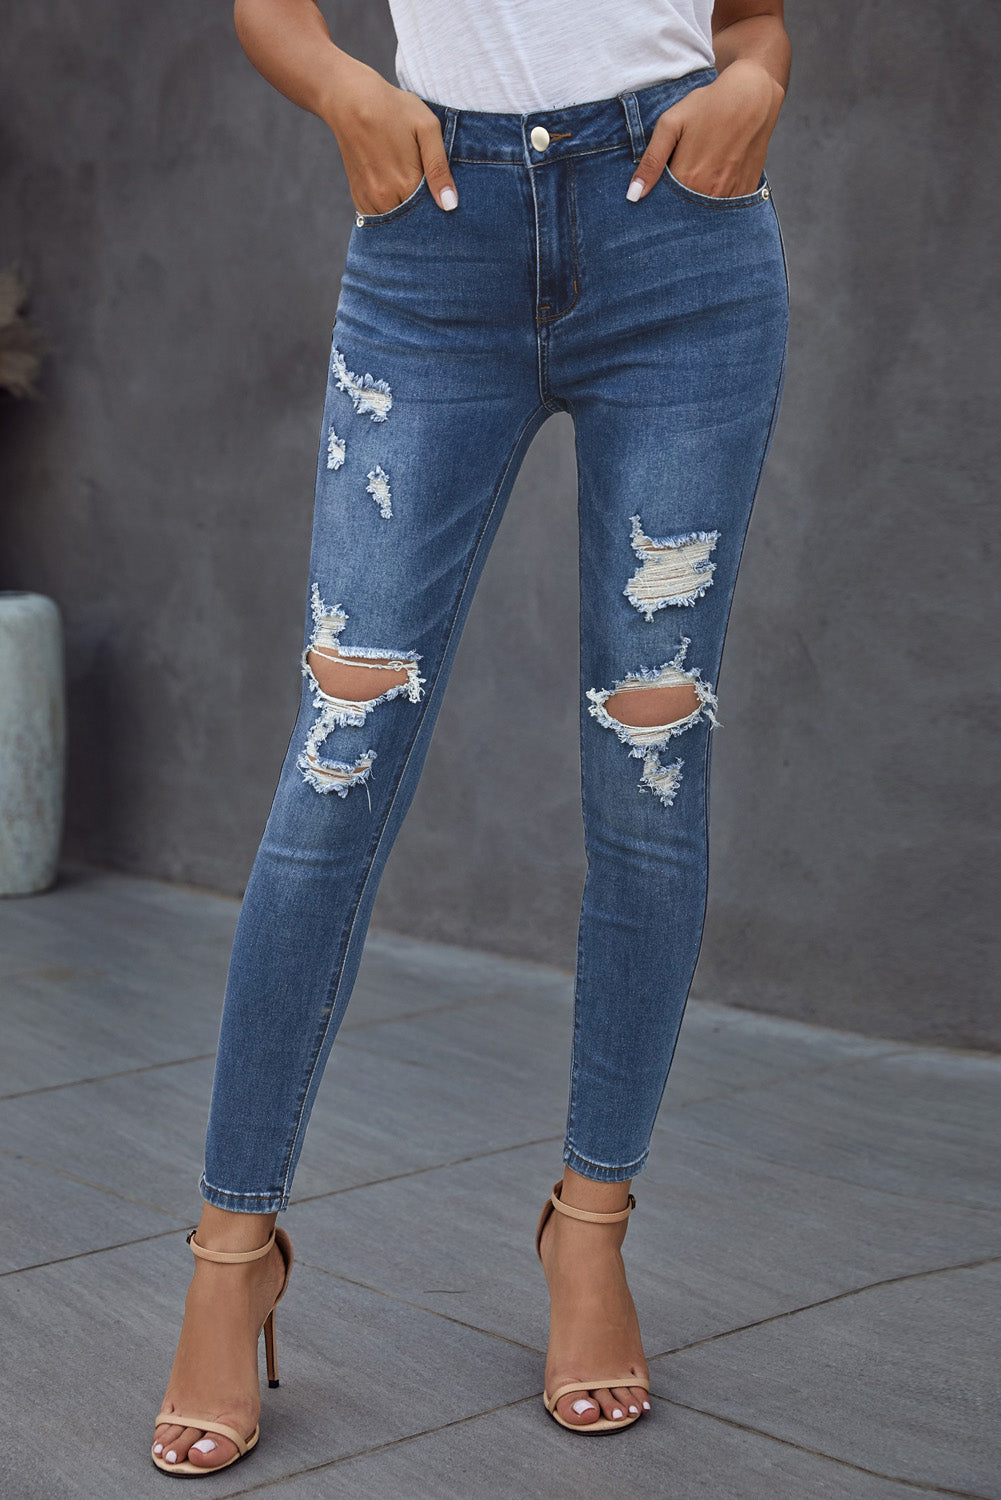 Jeans – Anchor Blue Jeans